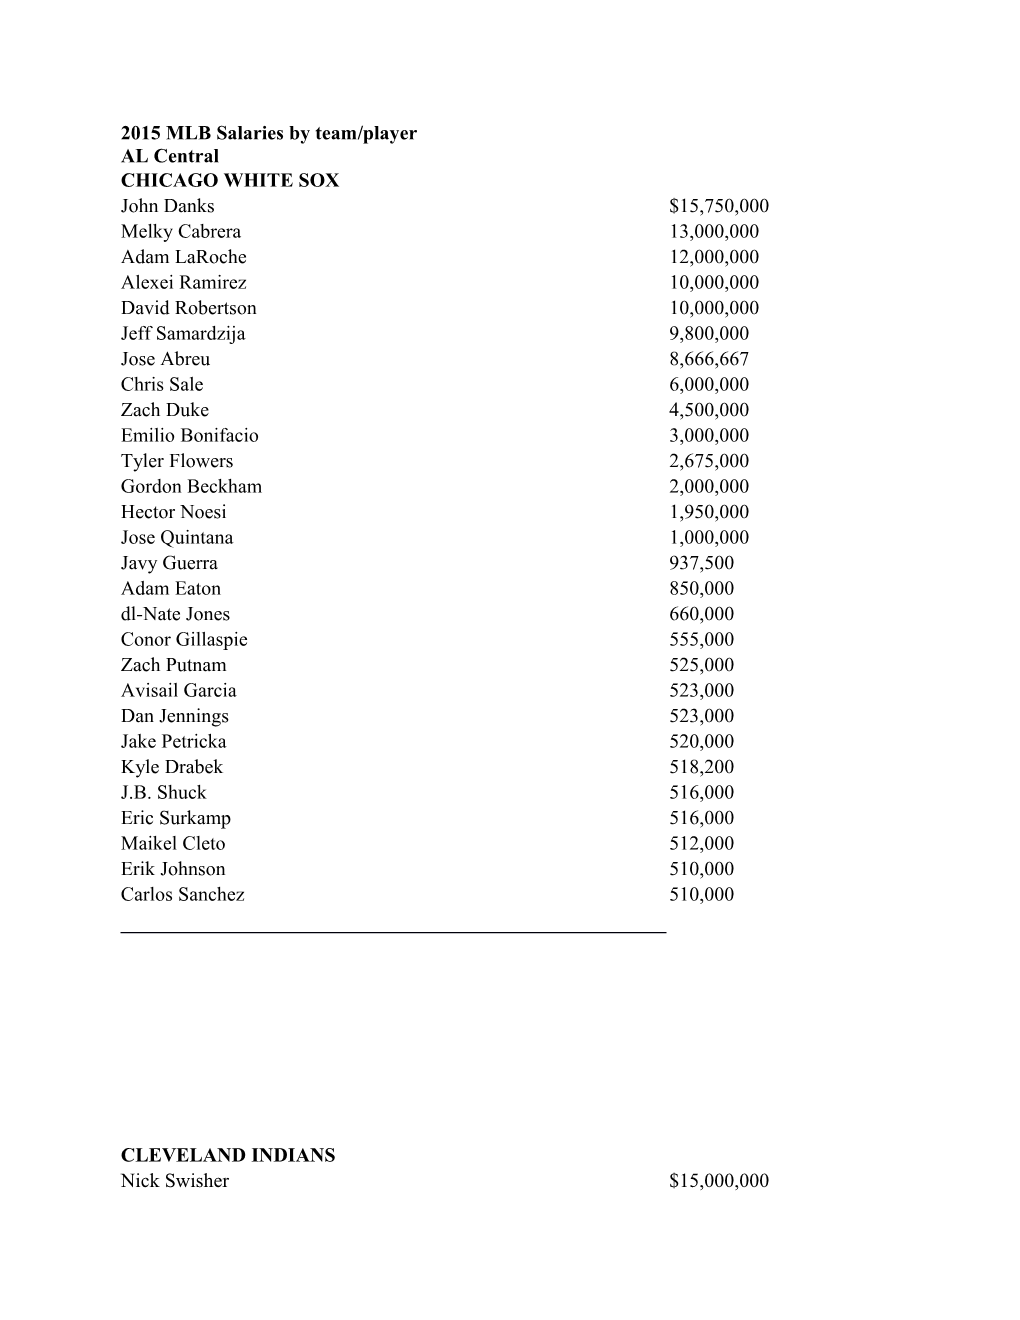 2015 MLB Salaries by Team/Player